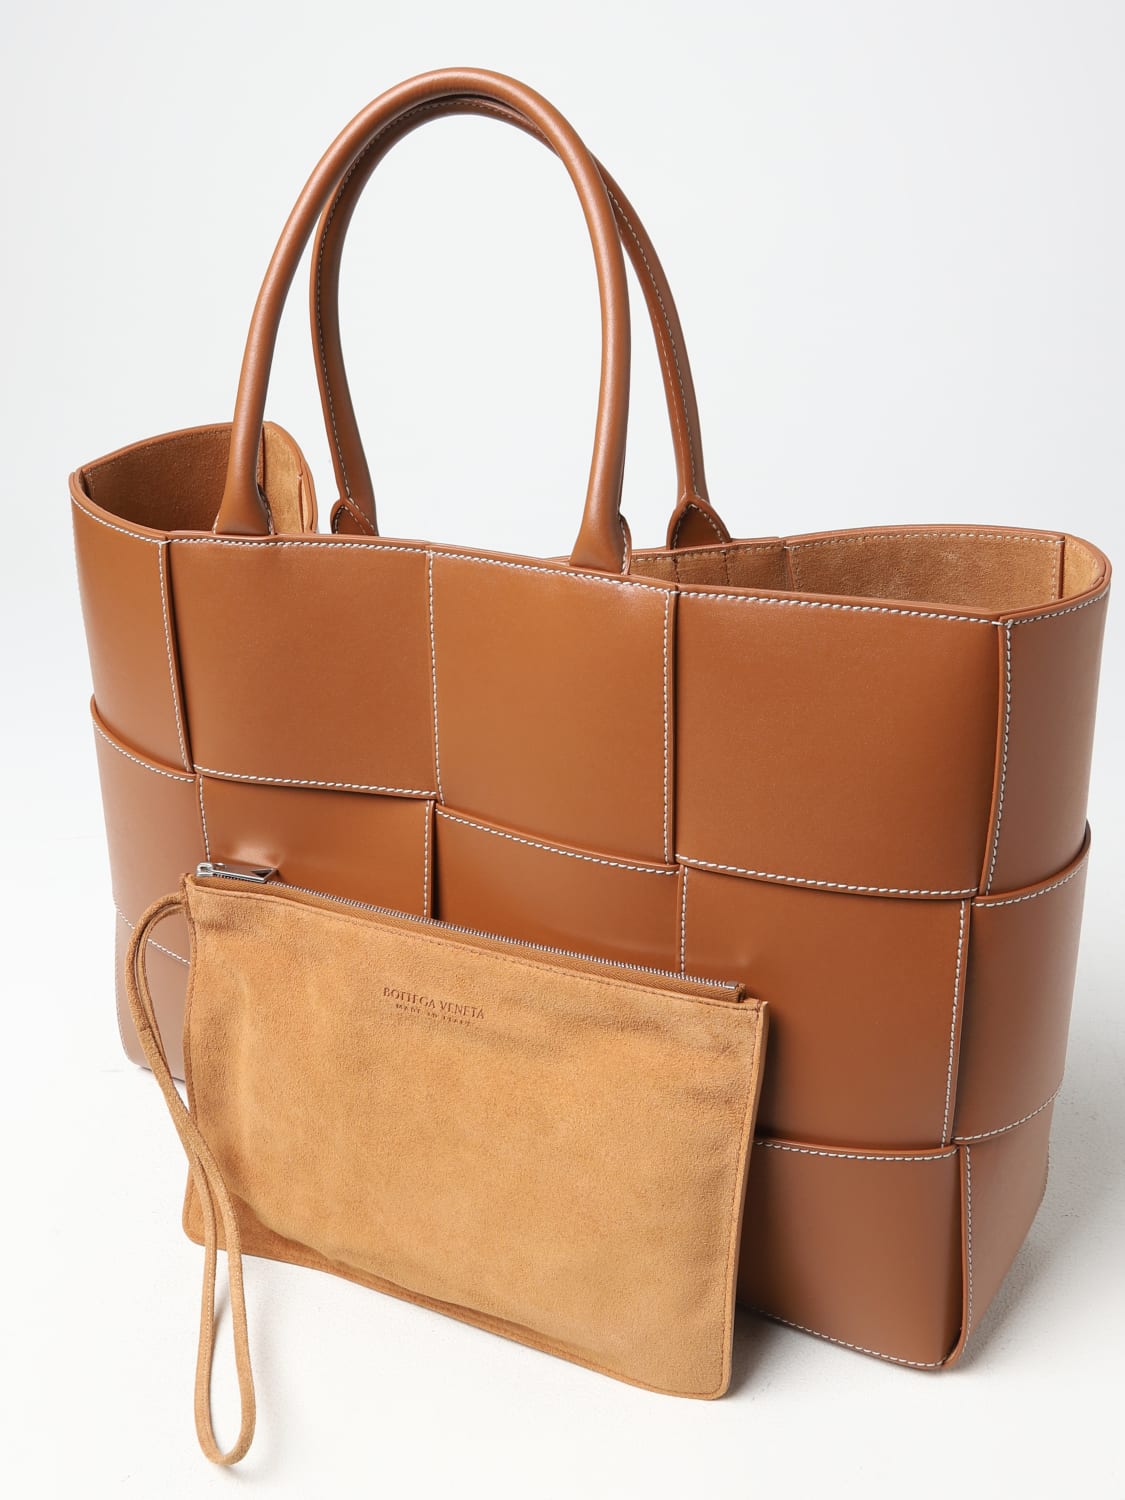 BOTTEGA VENETA: leather bag - Brown | Bottega Veneta bags